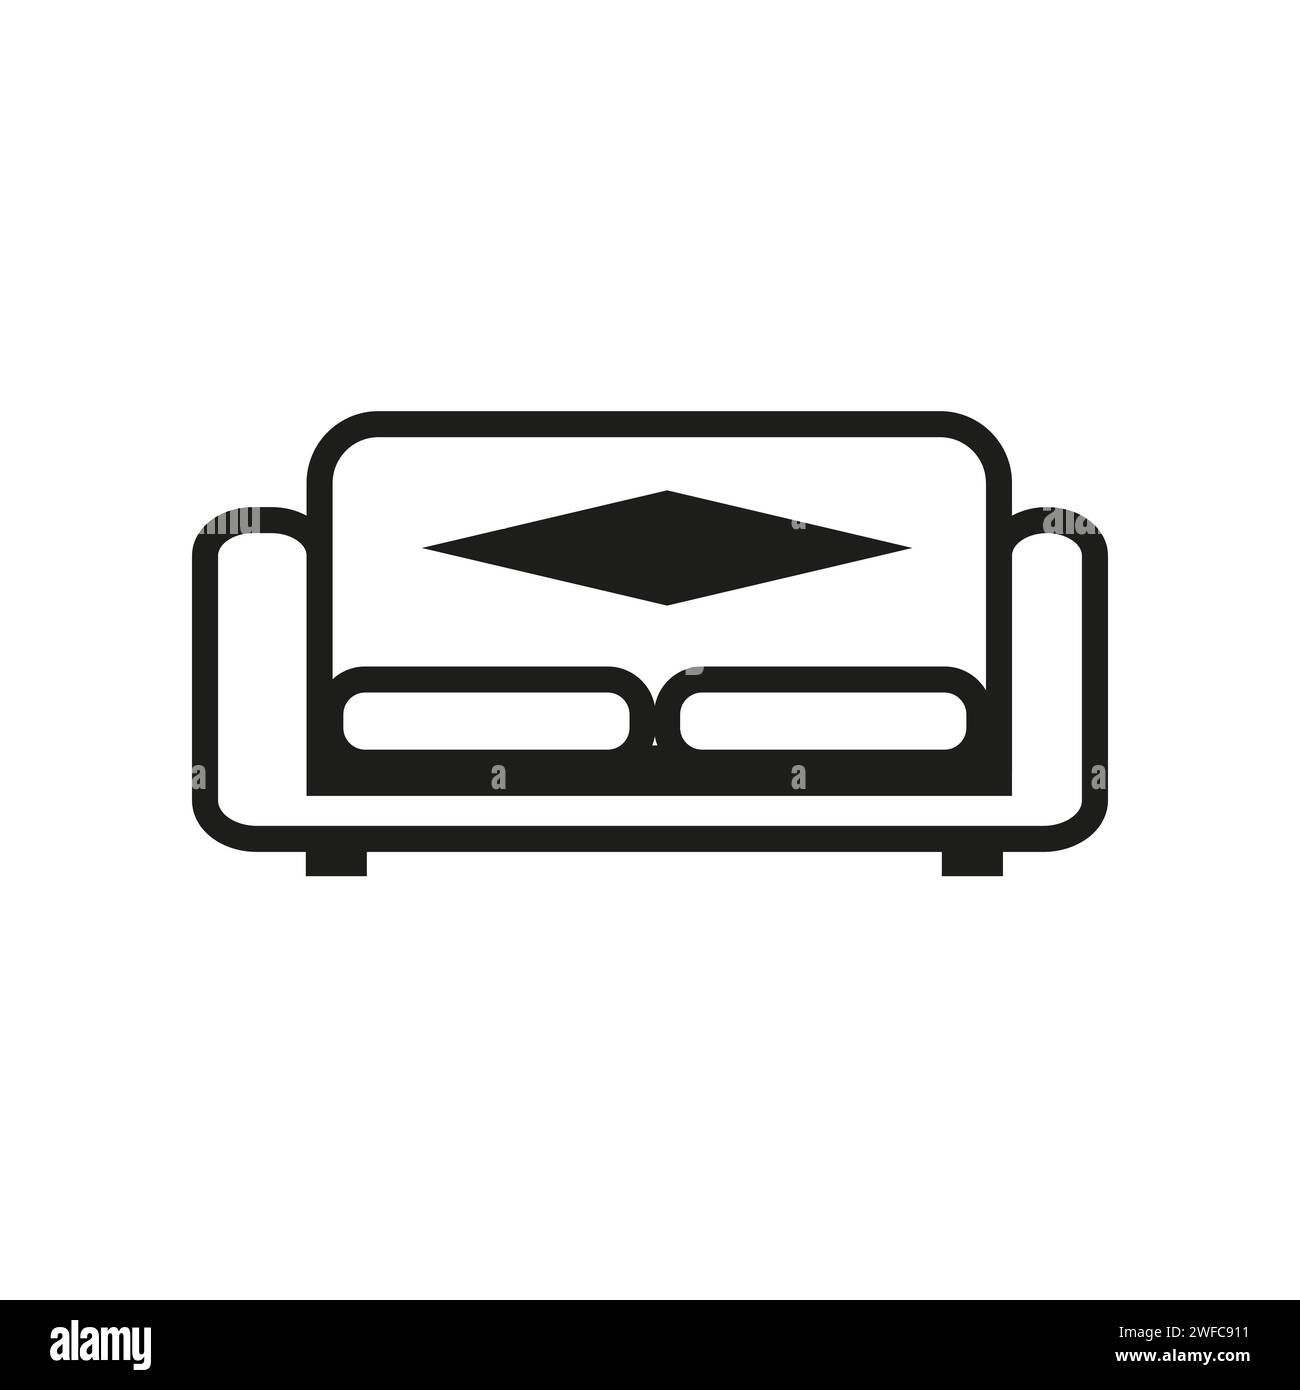 Sofa icon. Vector illustration. Stock image. EPS 10. Stock Vector